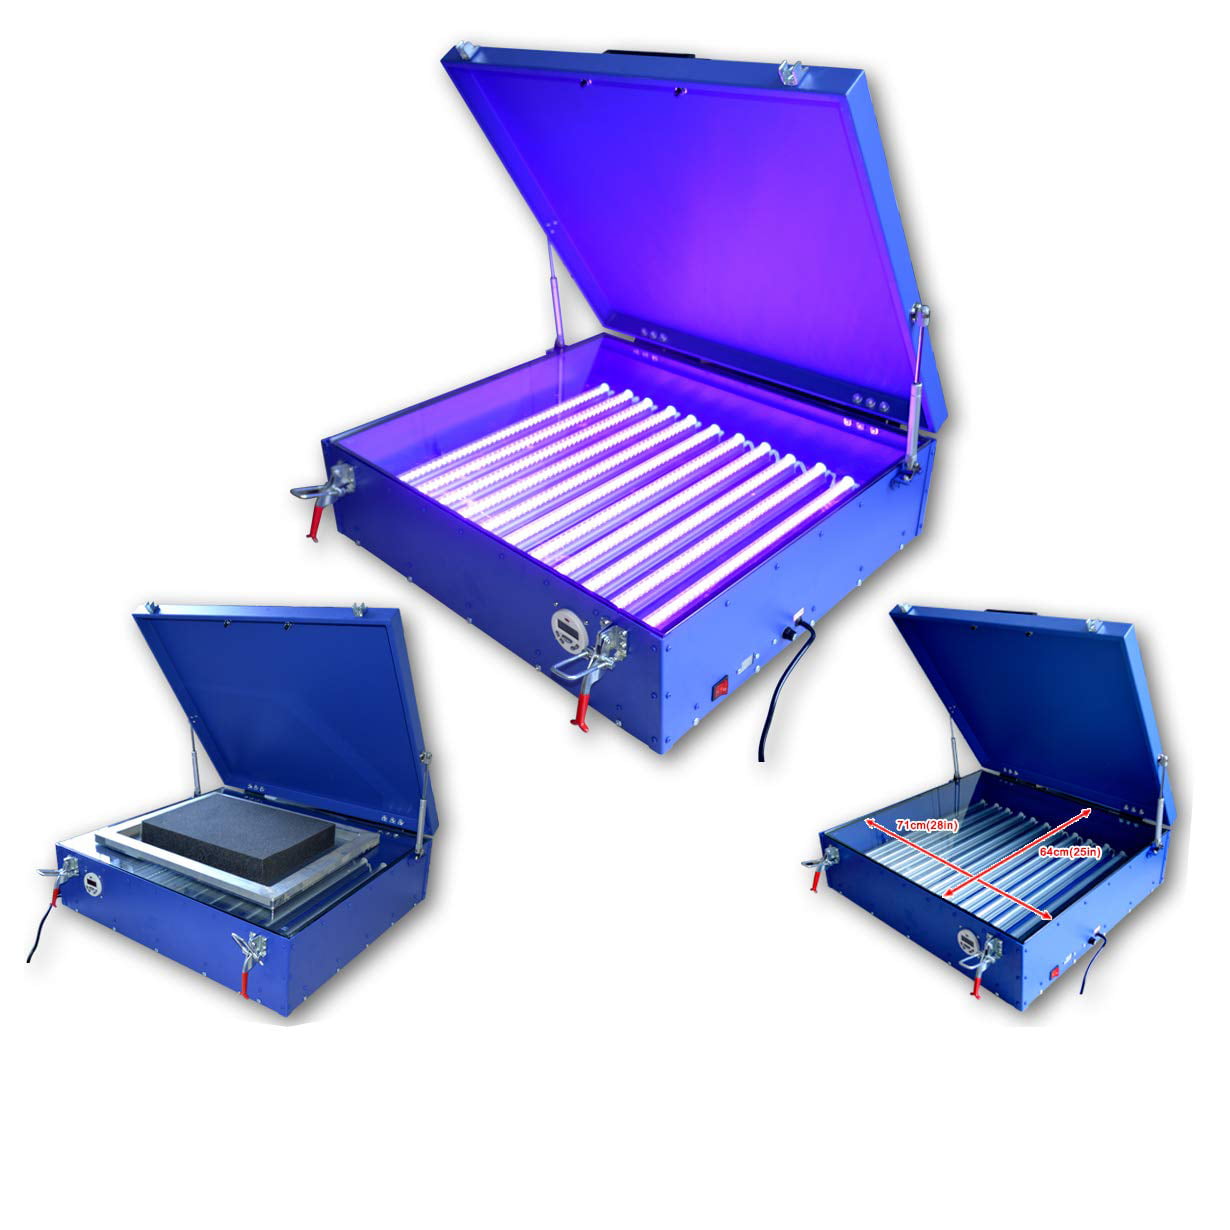 TECHTONGDA UV Exposure Unit 20x24 Inches Silk Screen Printing LED Light Box  Plate Burning 110V